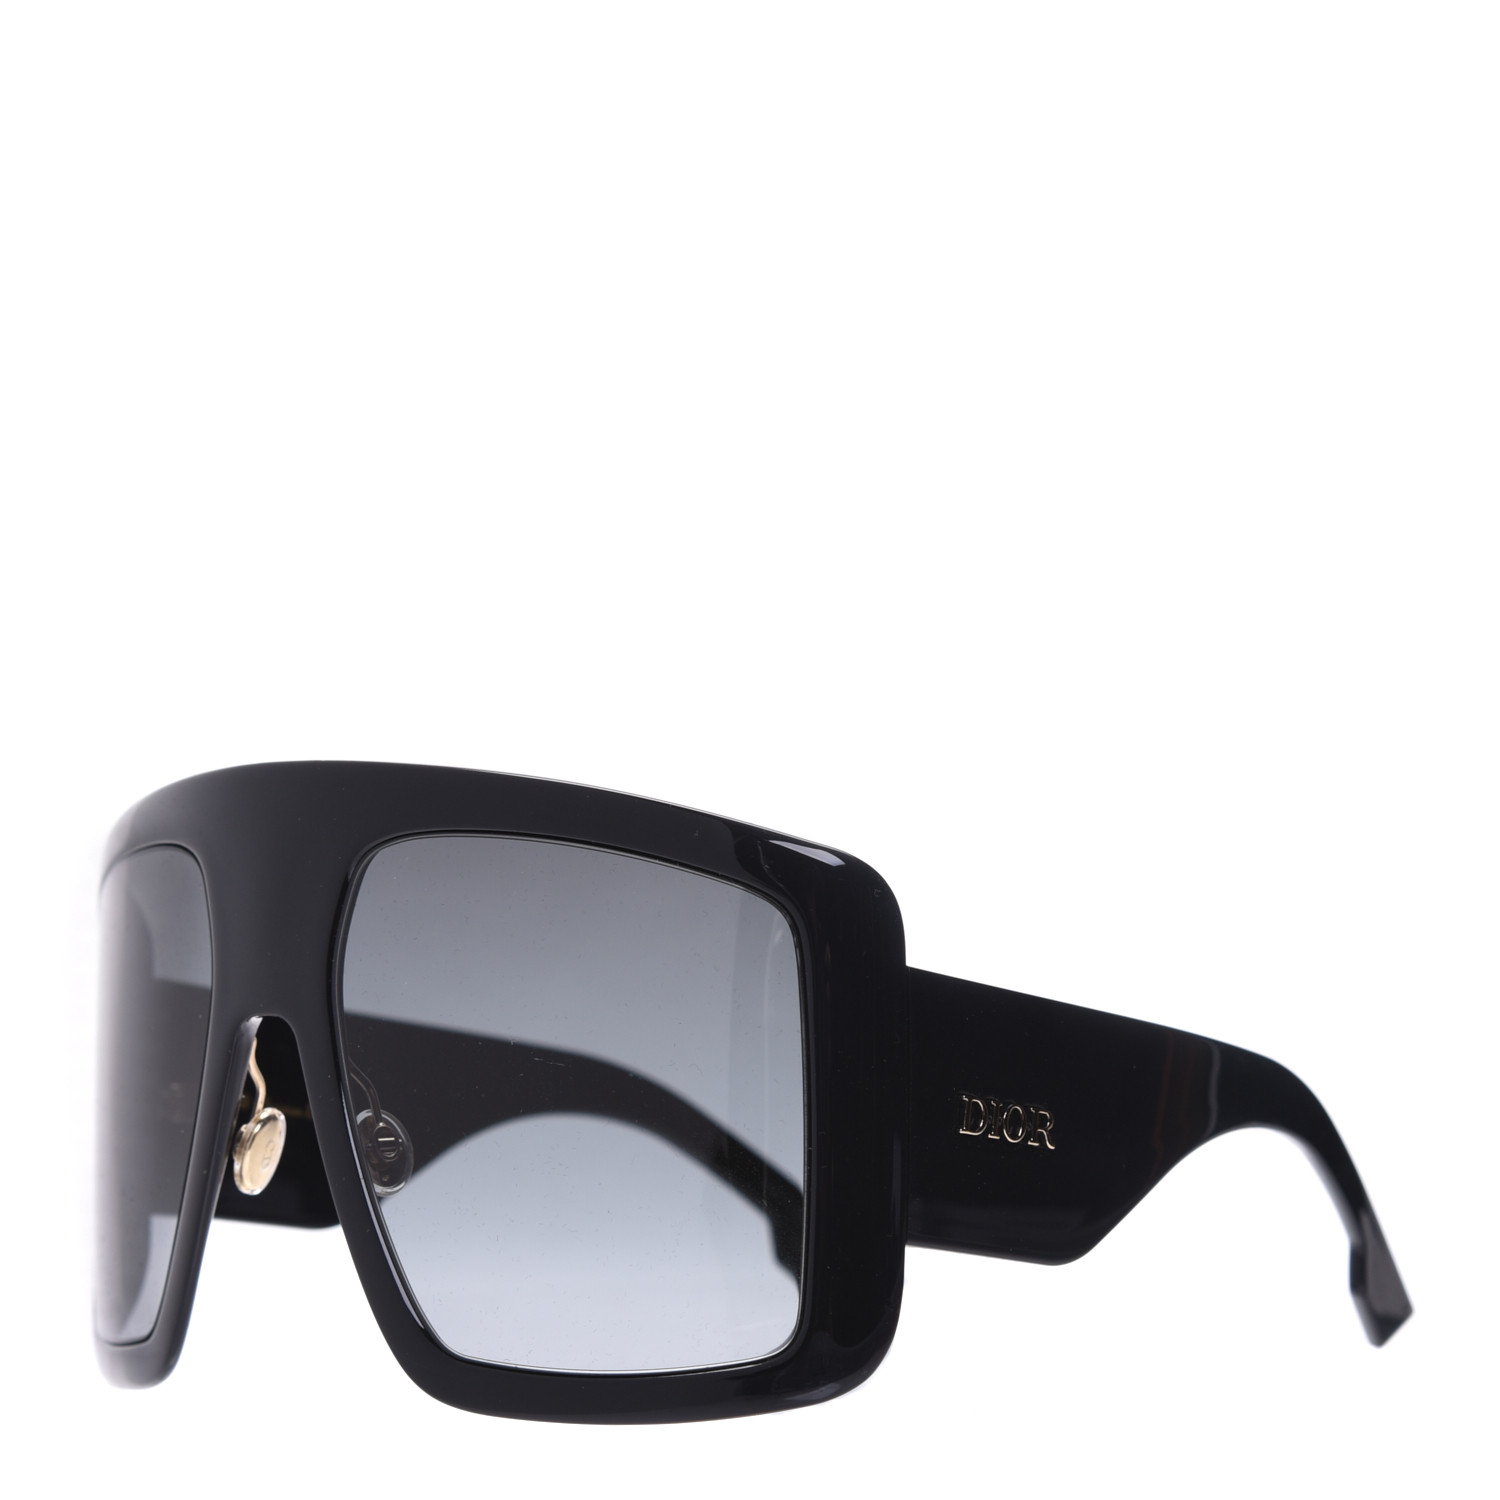 Christian Dior So Light 1 Shield Sunglasses Black 730598 Fashionphile 